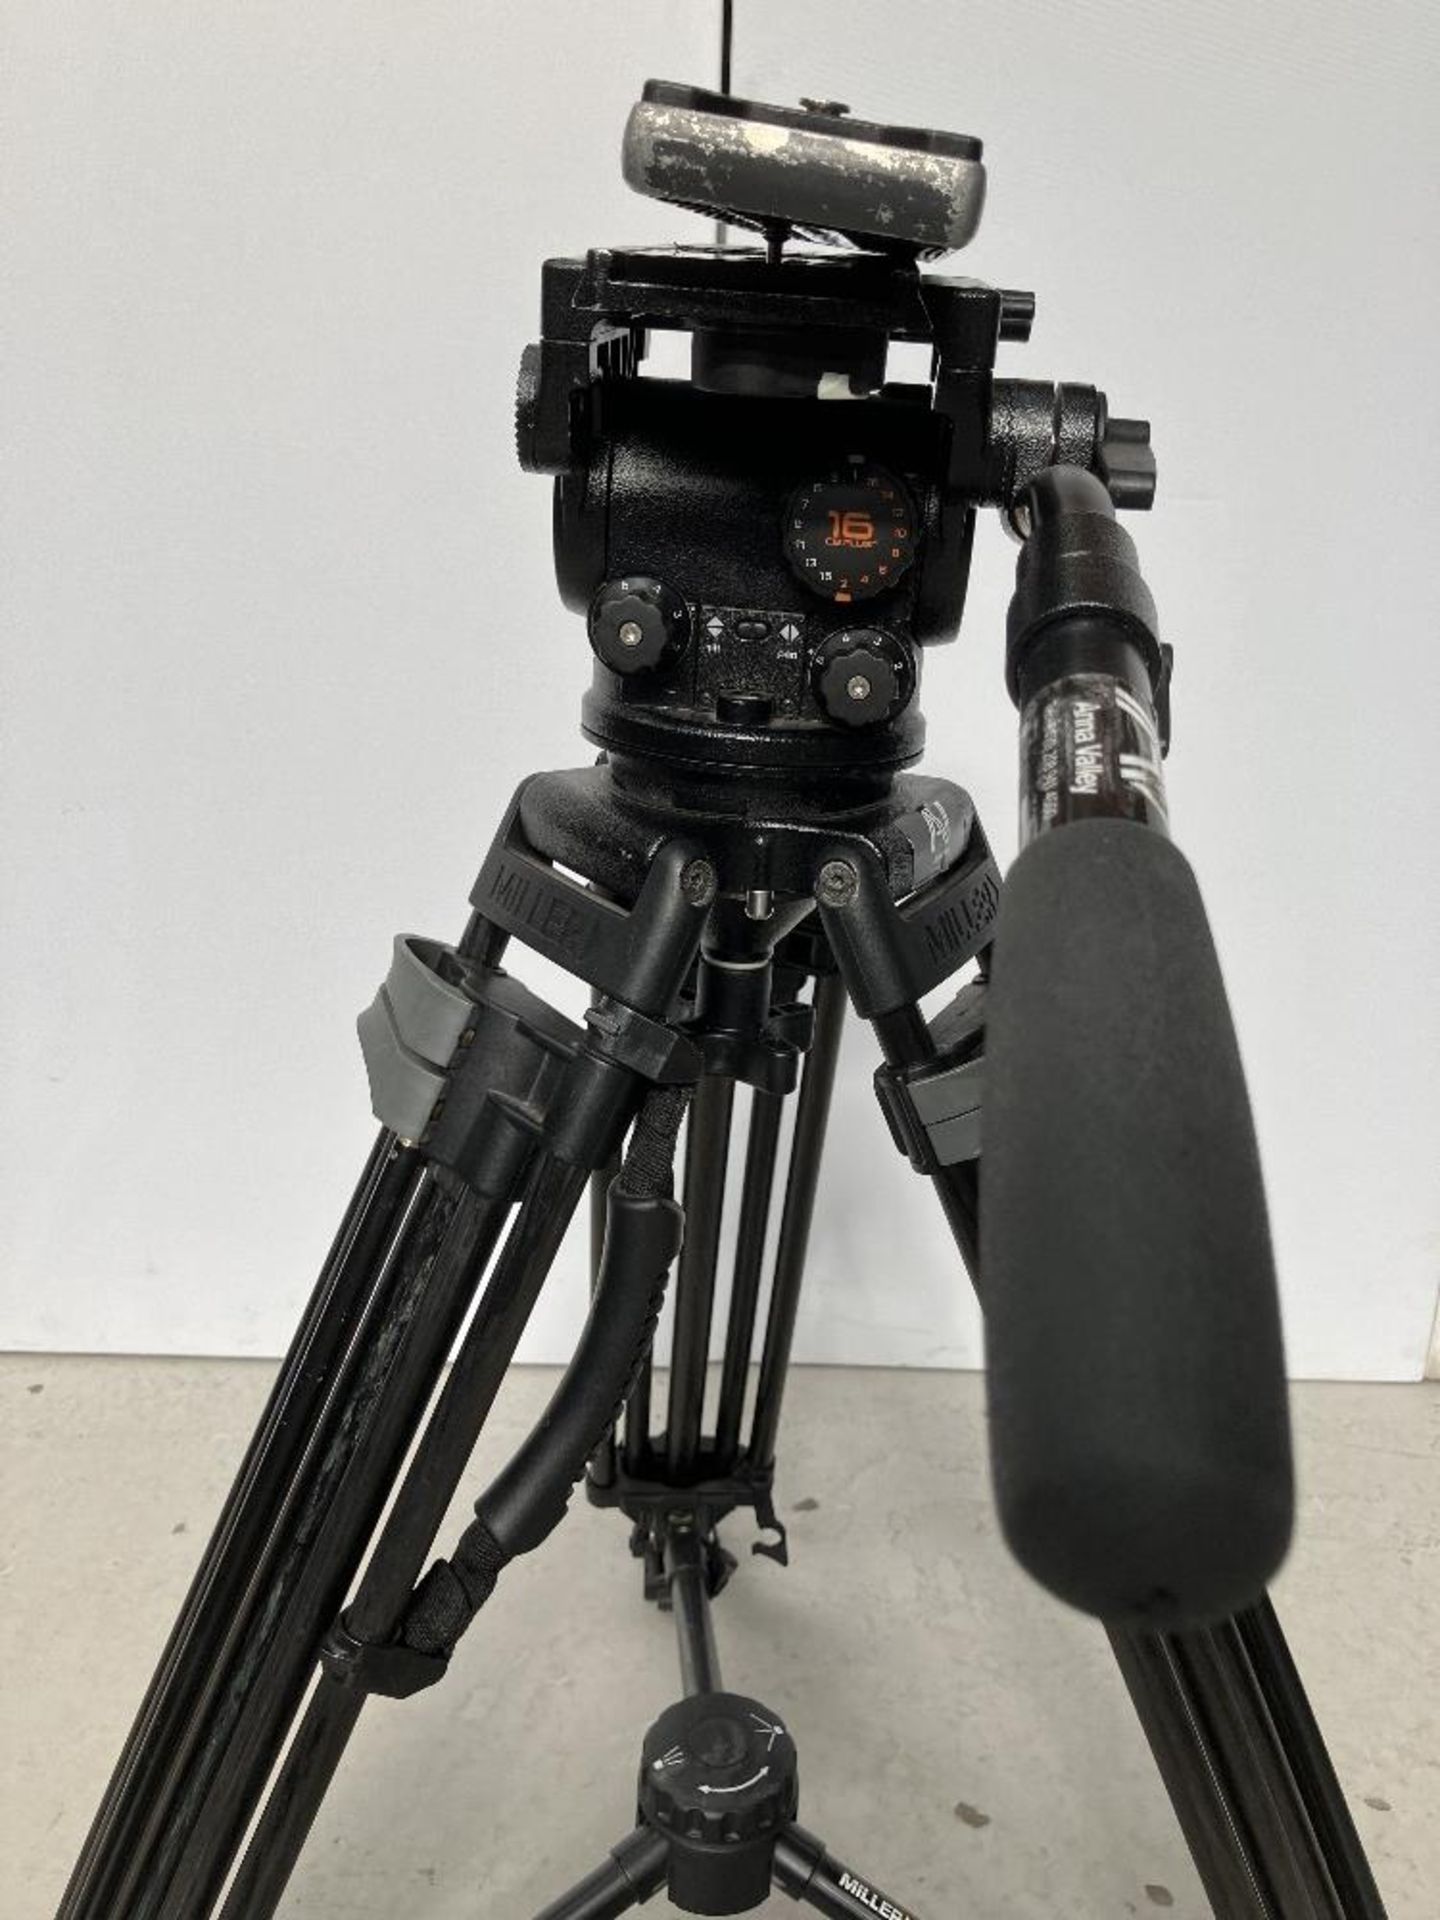 Miller Arrow 3X Tripod Head System with Extendable Carbon Fibre Legs - Image 2 of 5